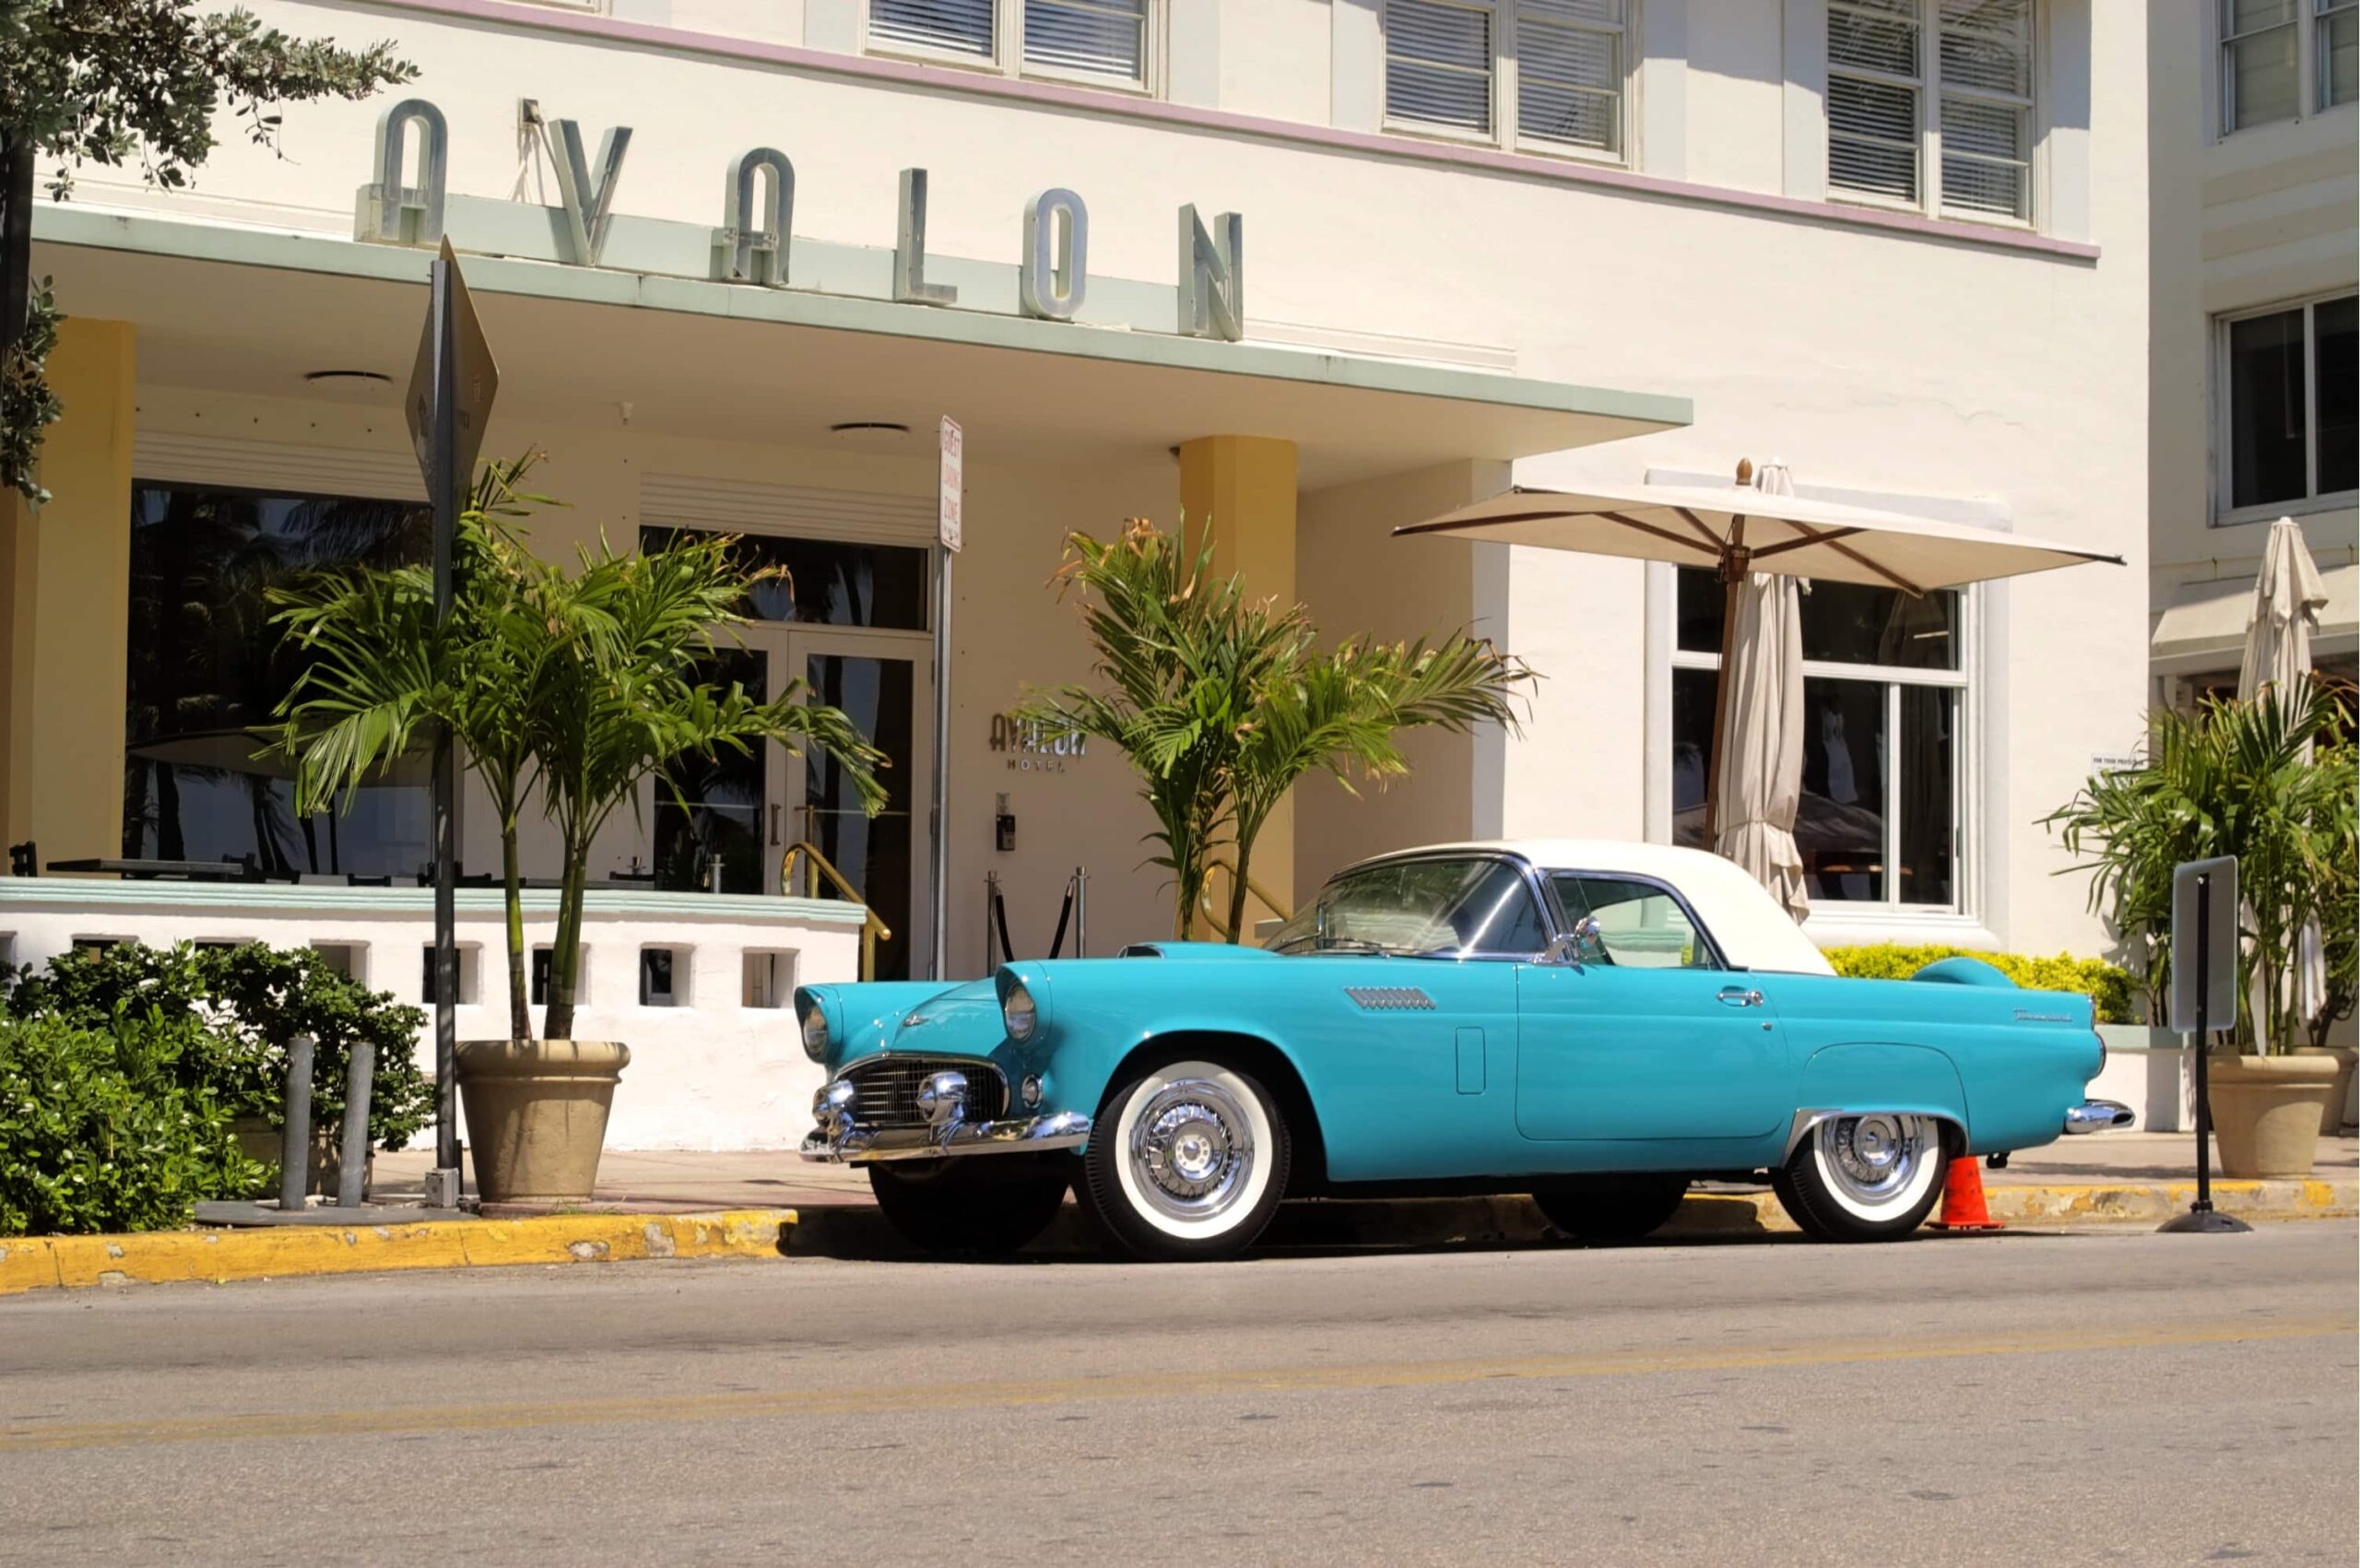 Vintage car in South Beach, Miami (photo: Deyson Ortiz)